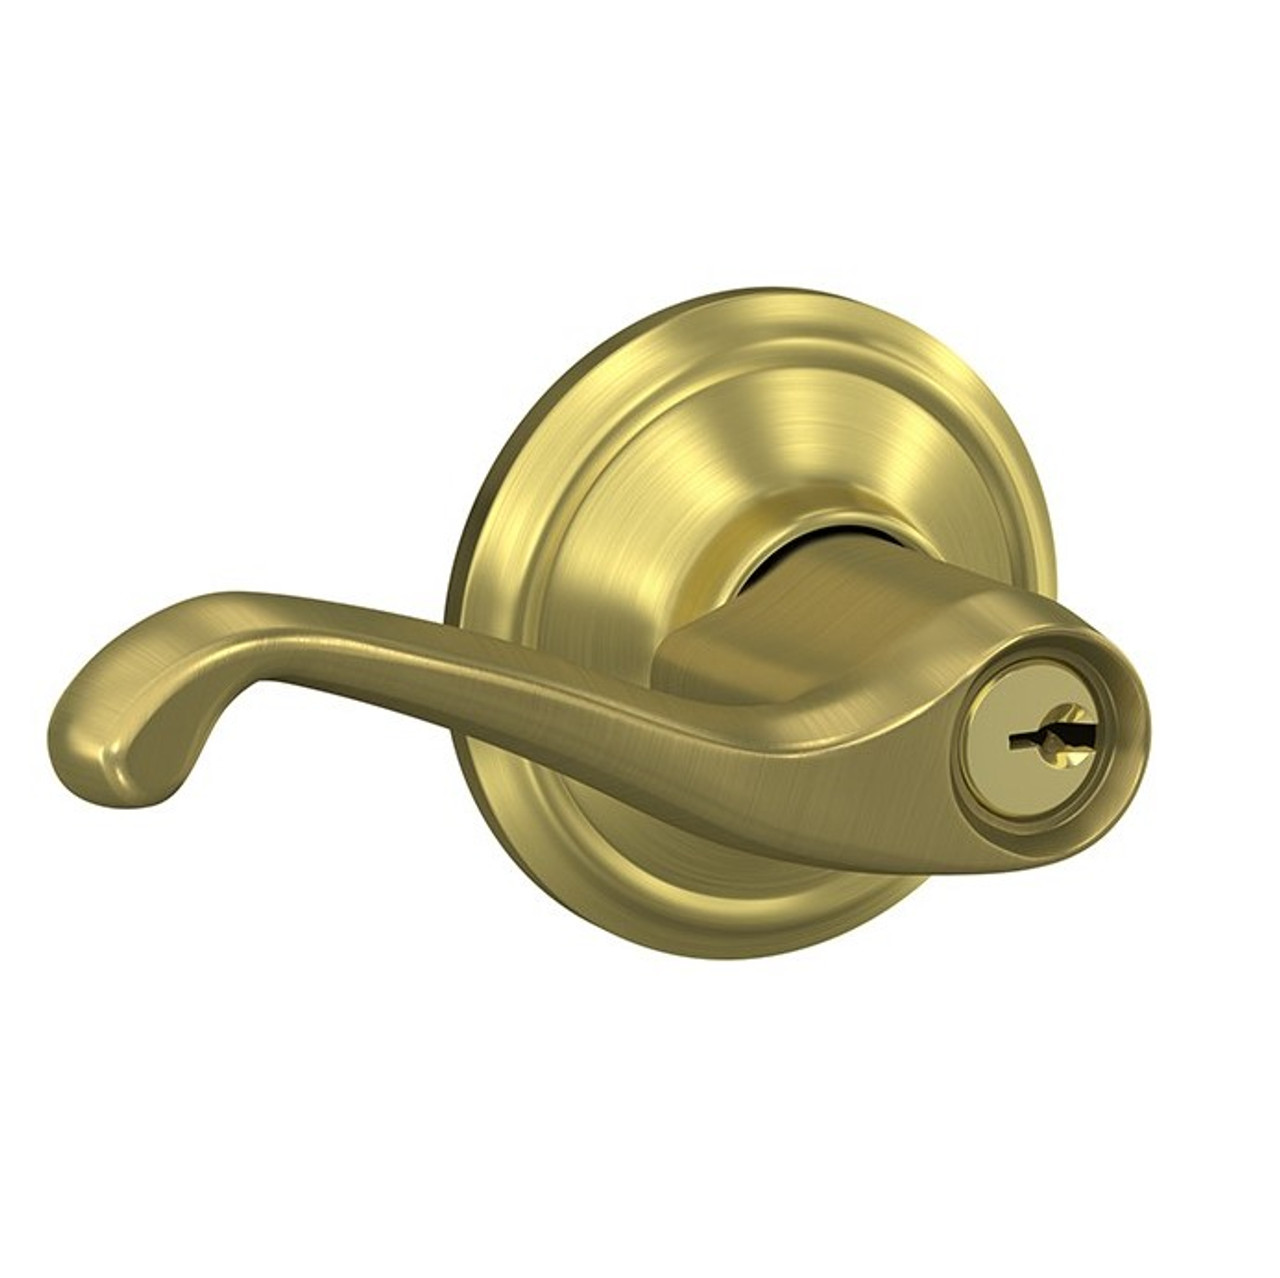 Schlage Keyed Entry Flair Lever Door Lock with Standard Trim